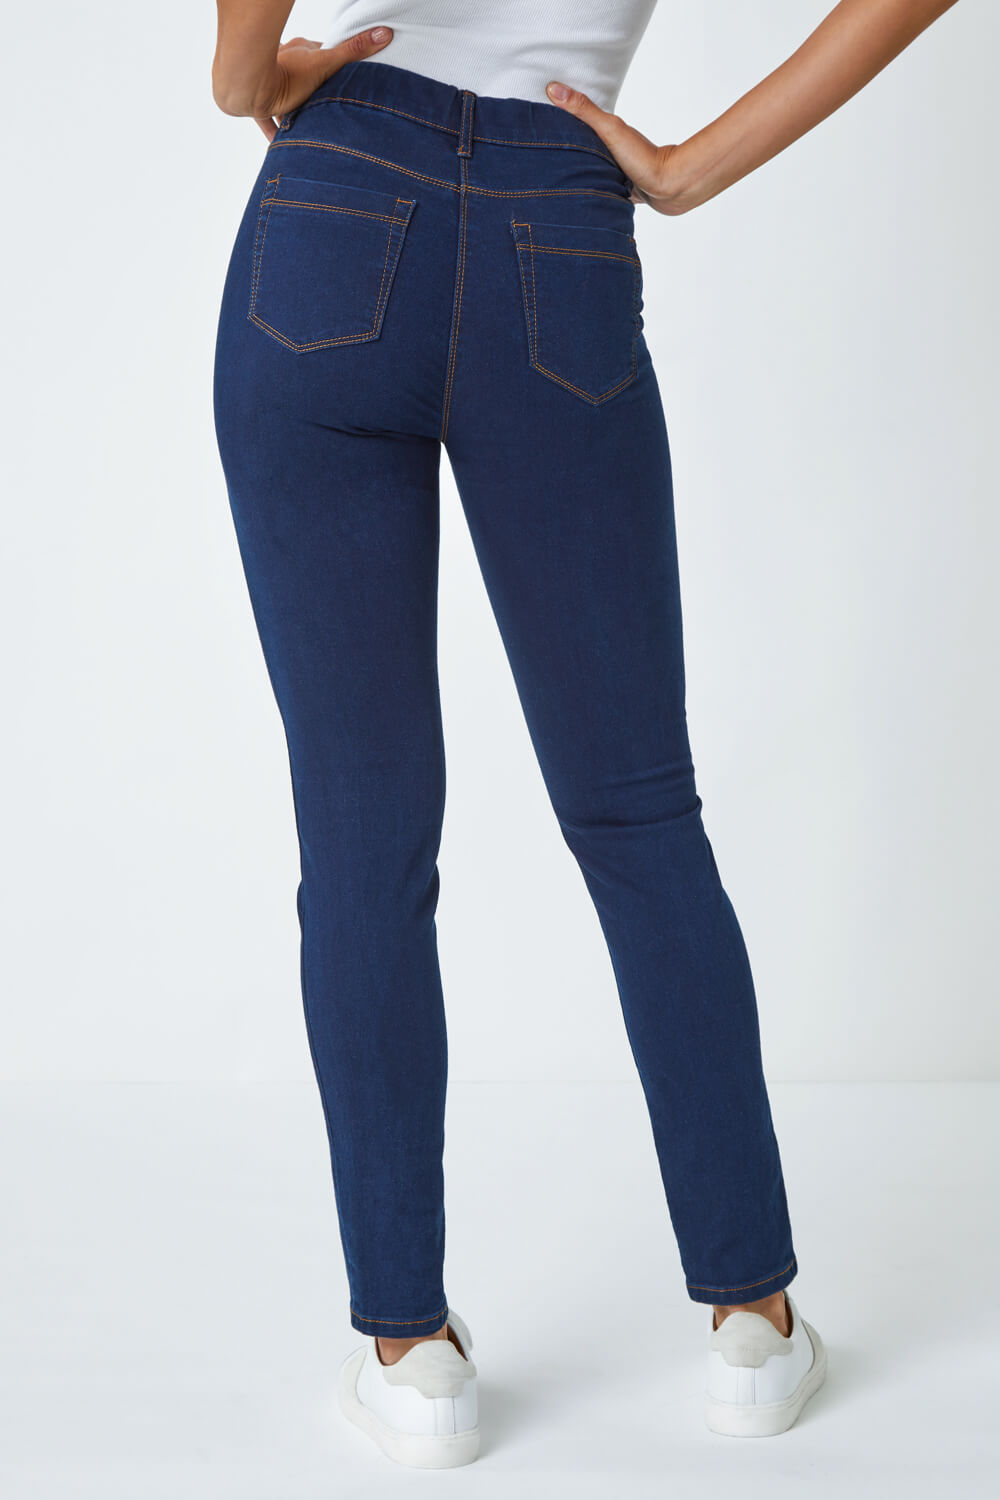 Girls Denim Jeans Skinny Jeggings Stretchy Pants Cotton Black/Grey/Blue |  SALE